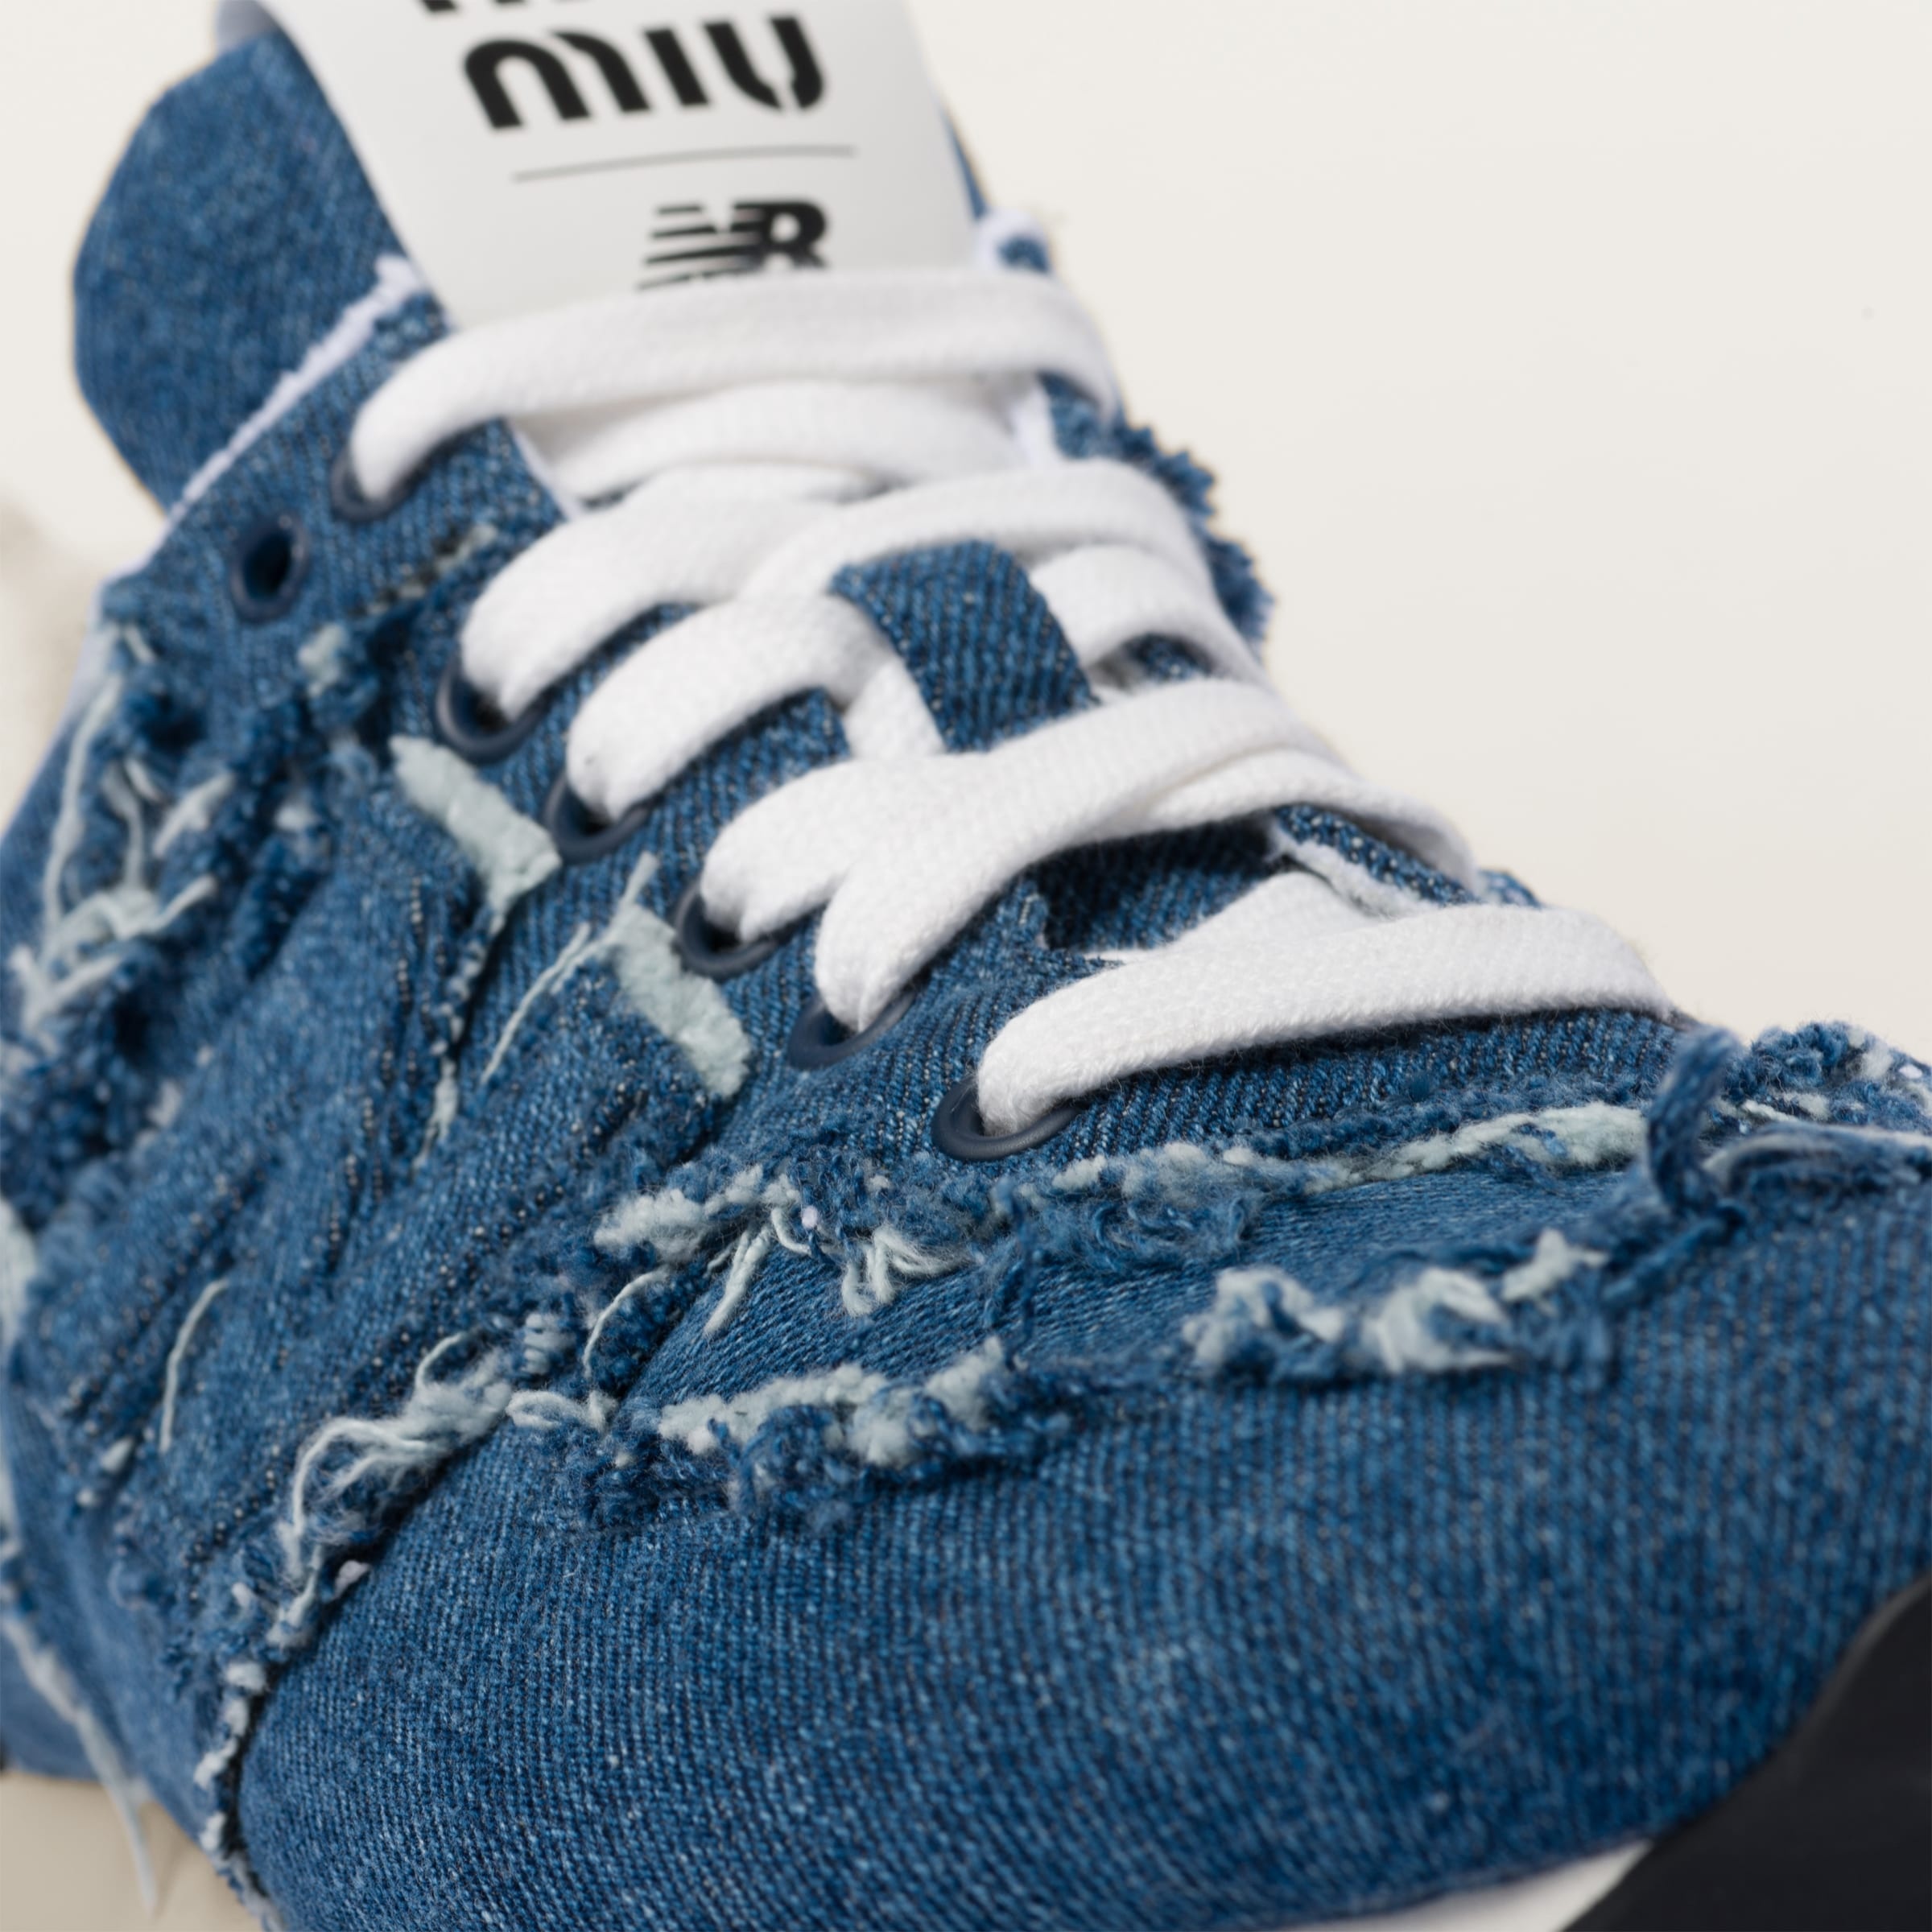 New Balance 574 x Miu Miu denim sneakers - 6